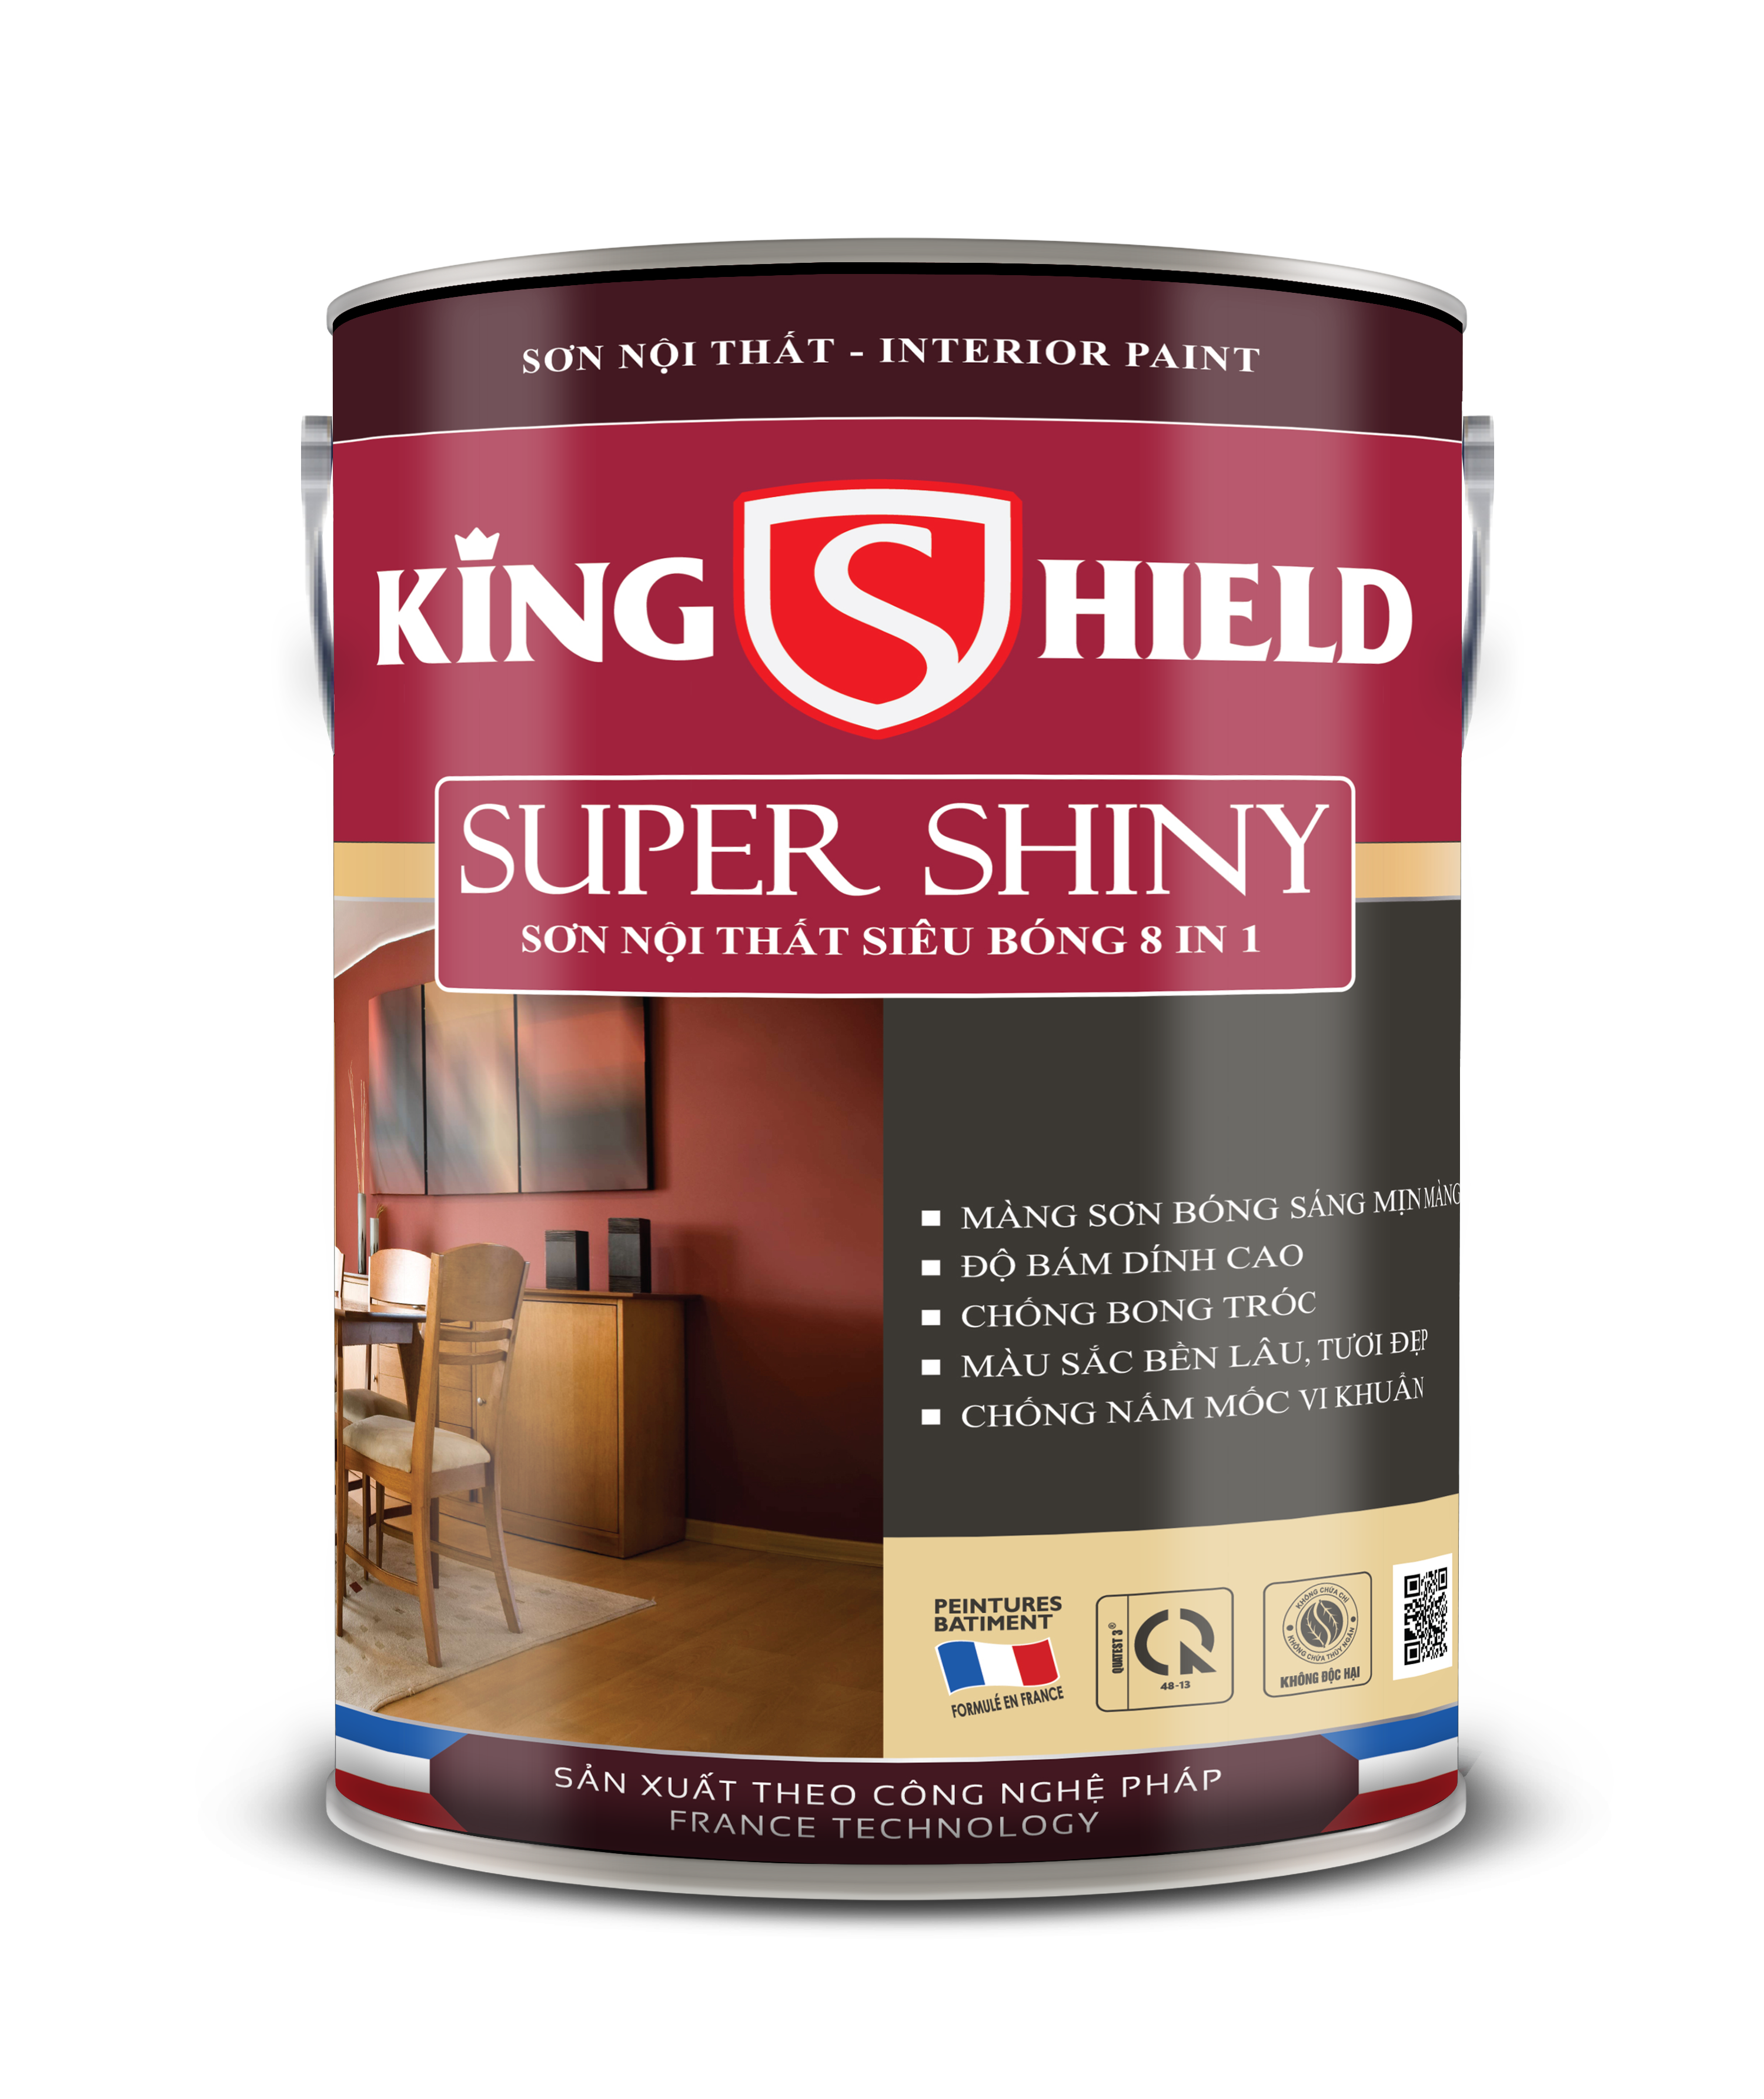 KINGSHIELD SUPER SHINY INTERIOR